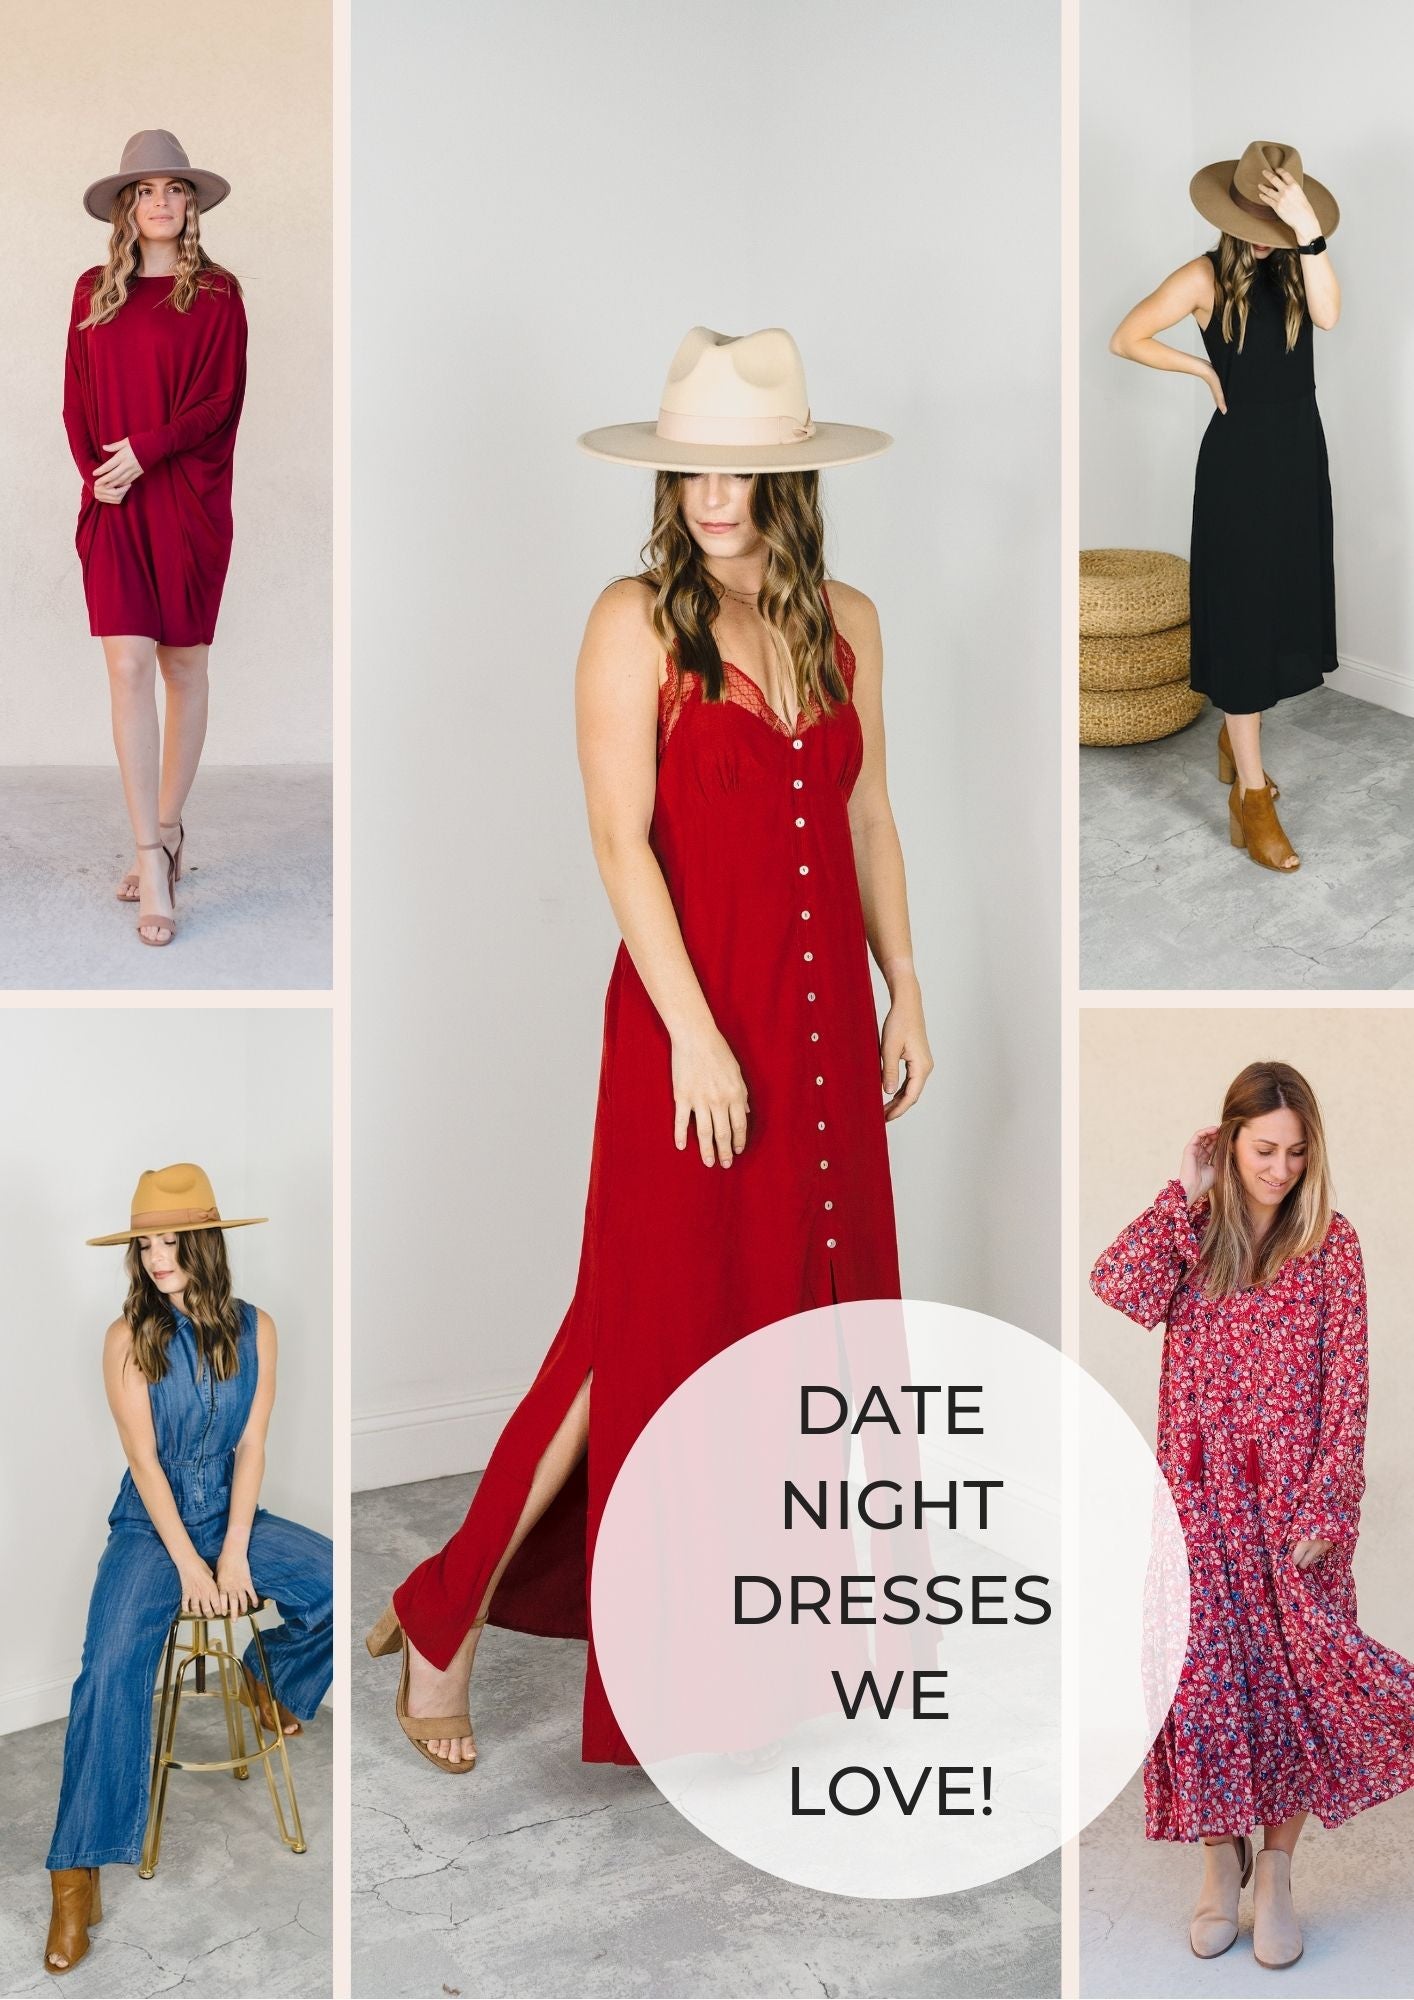 Date Night Dresses We Love!